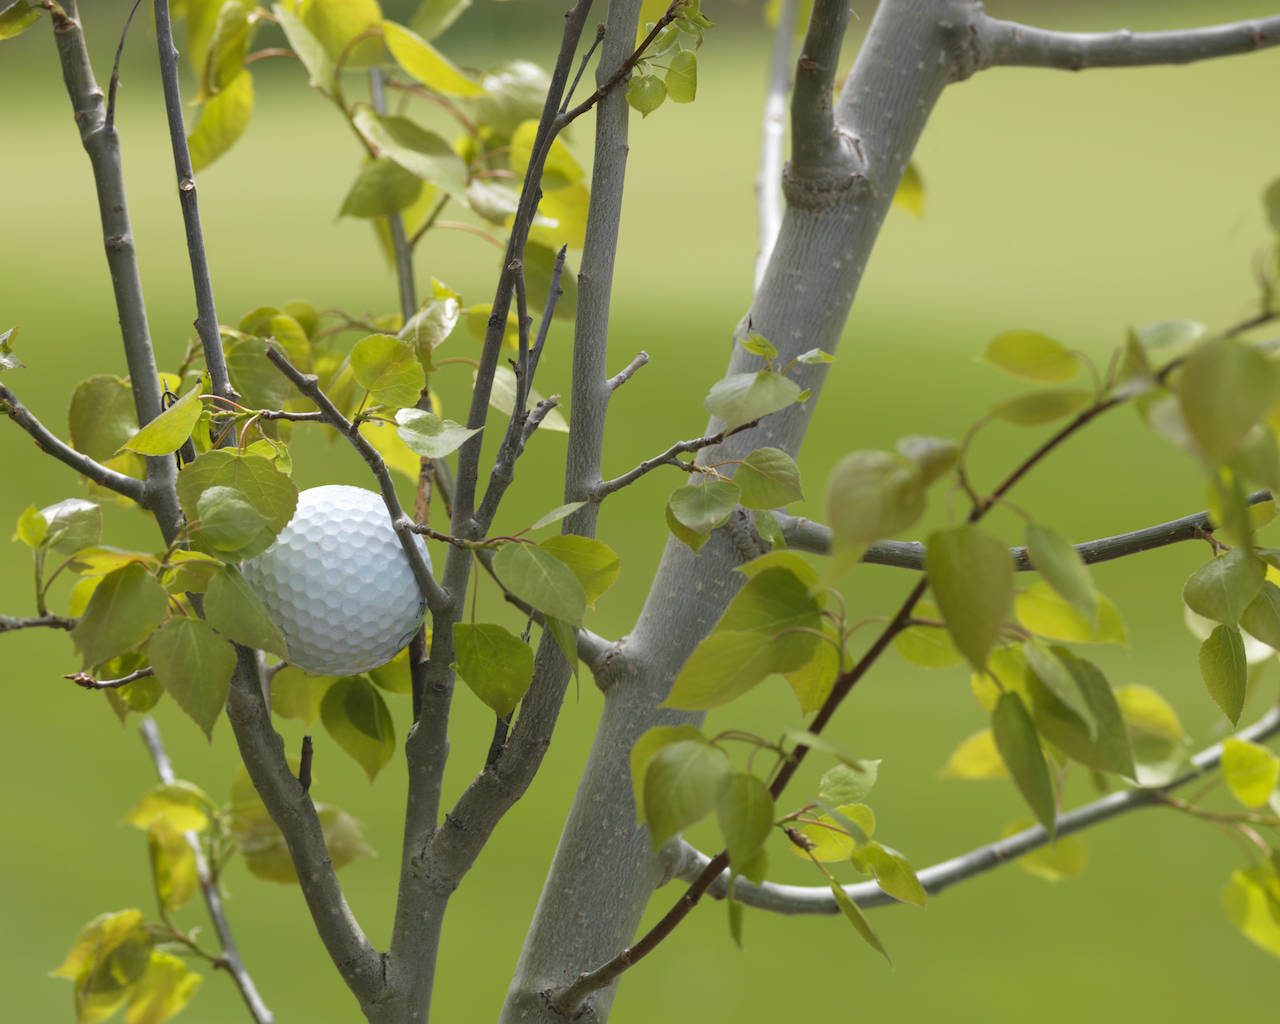 Golf ball stuck in tree